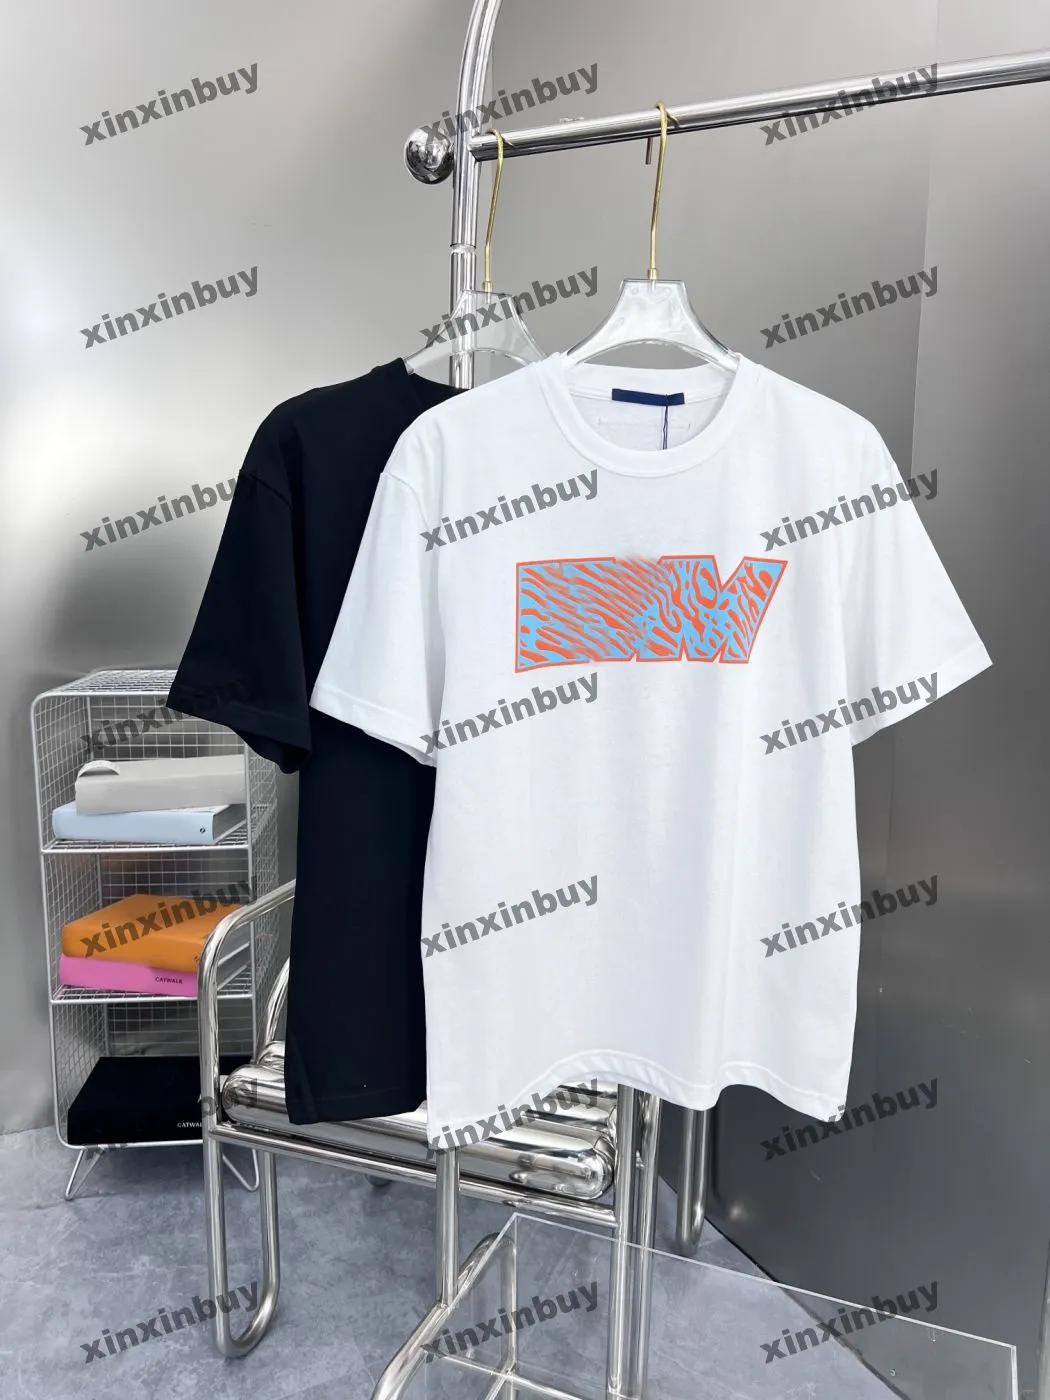 xinxinbuy Hommes designer Tee t-shirt 23ss Poche lettres imprimer manches courtes coton femmes noir blanc bleu S-3XL